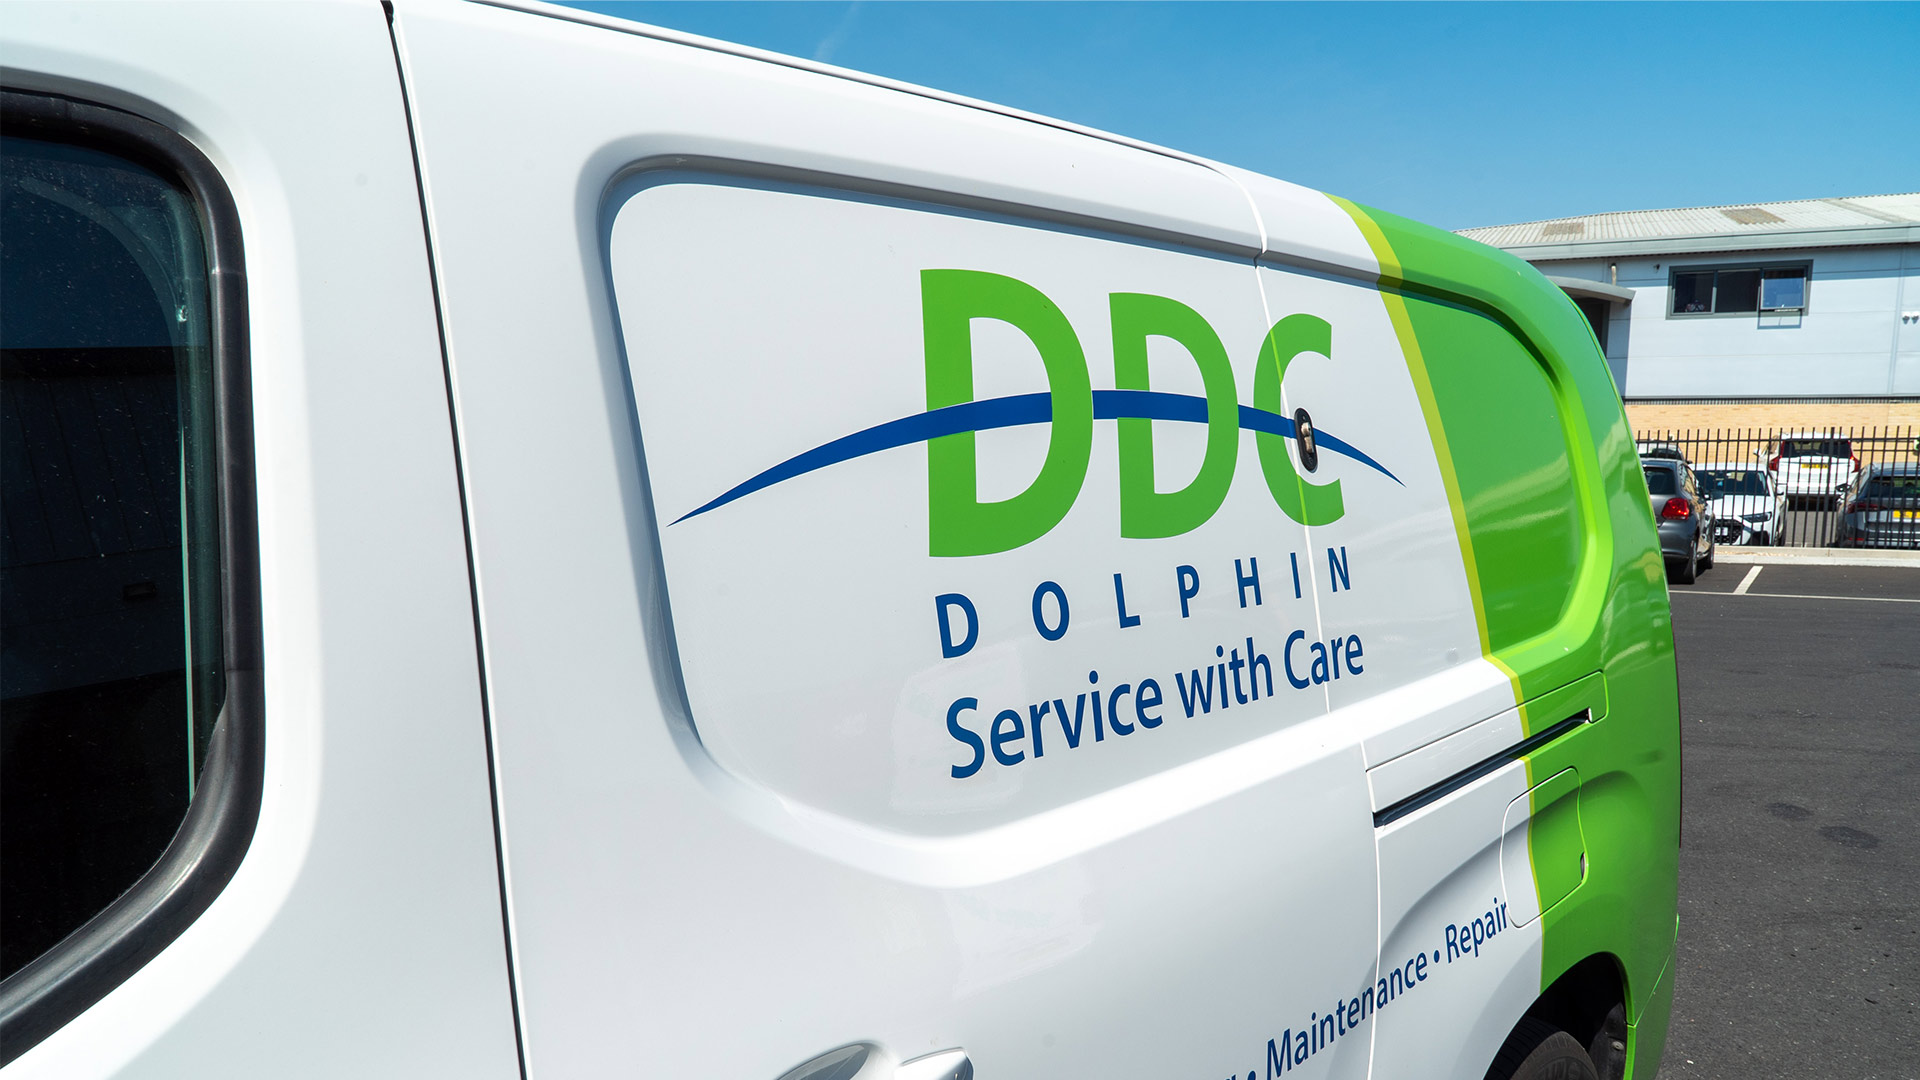 DDC Dolphin 360 Service Travel - DDC Dolphin